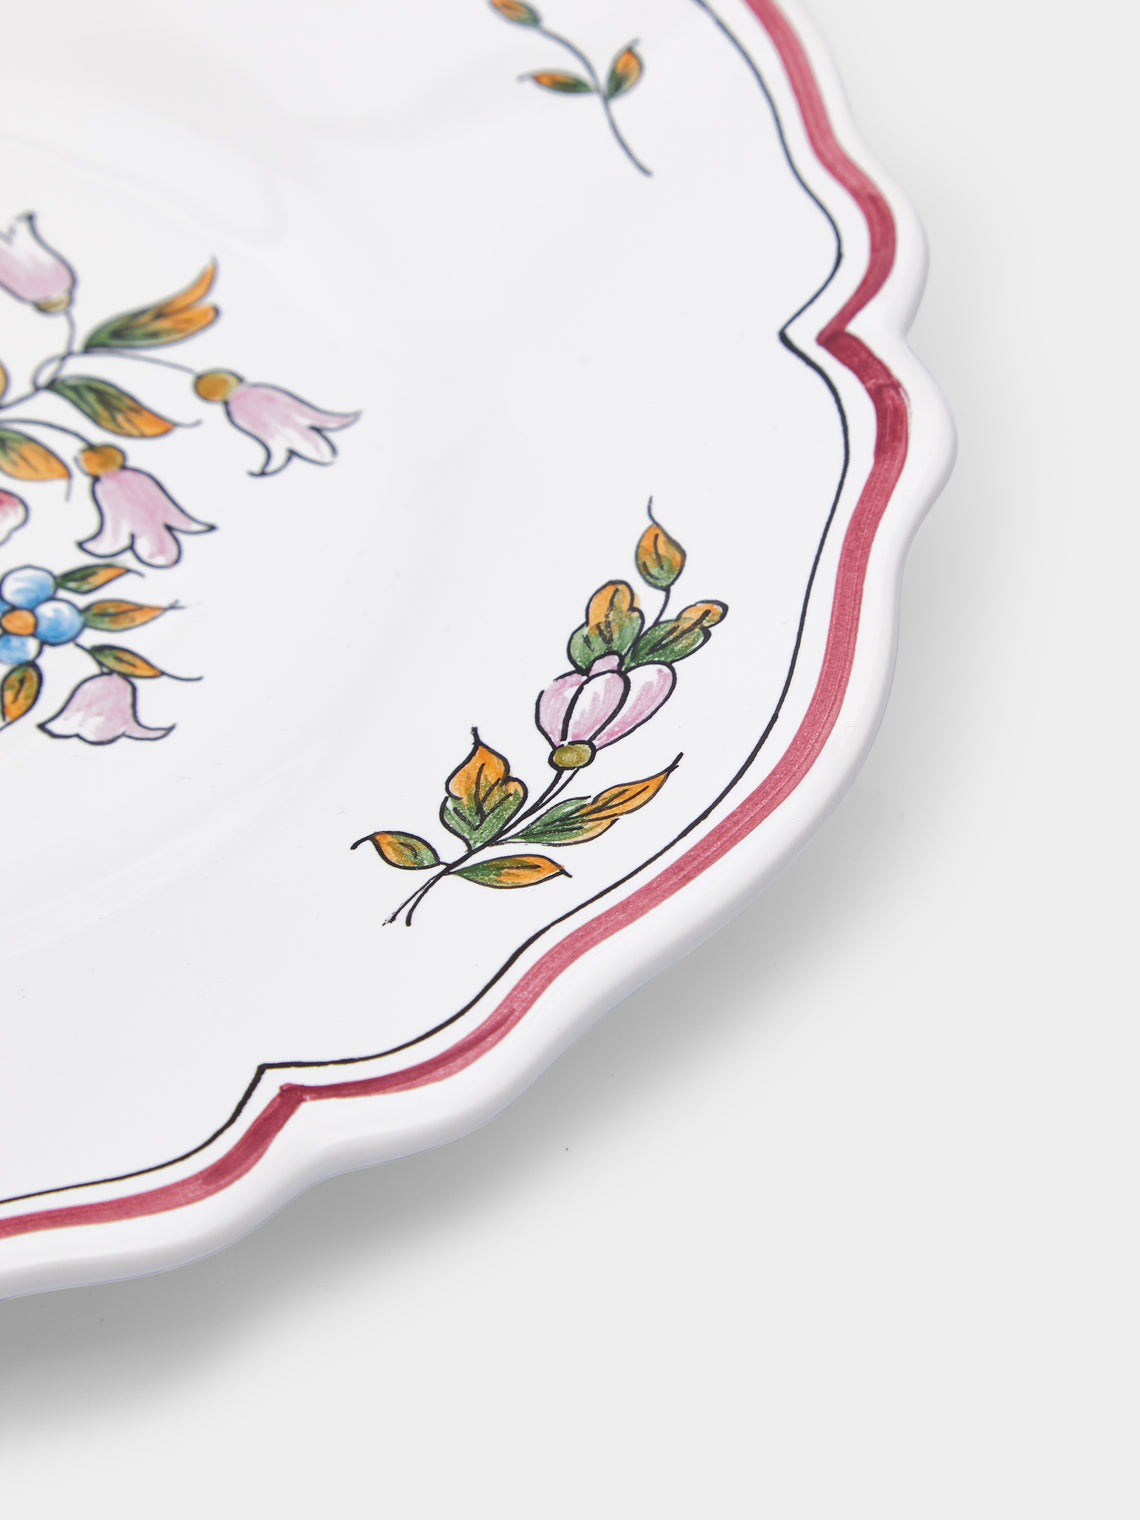 Bourg Joly Malicorne - Strasbourg Fleurs Hand-Painted Ceramic Dessert Plates (Set of 4) -  - ABASK